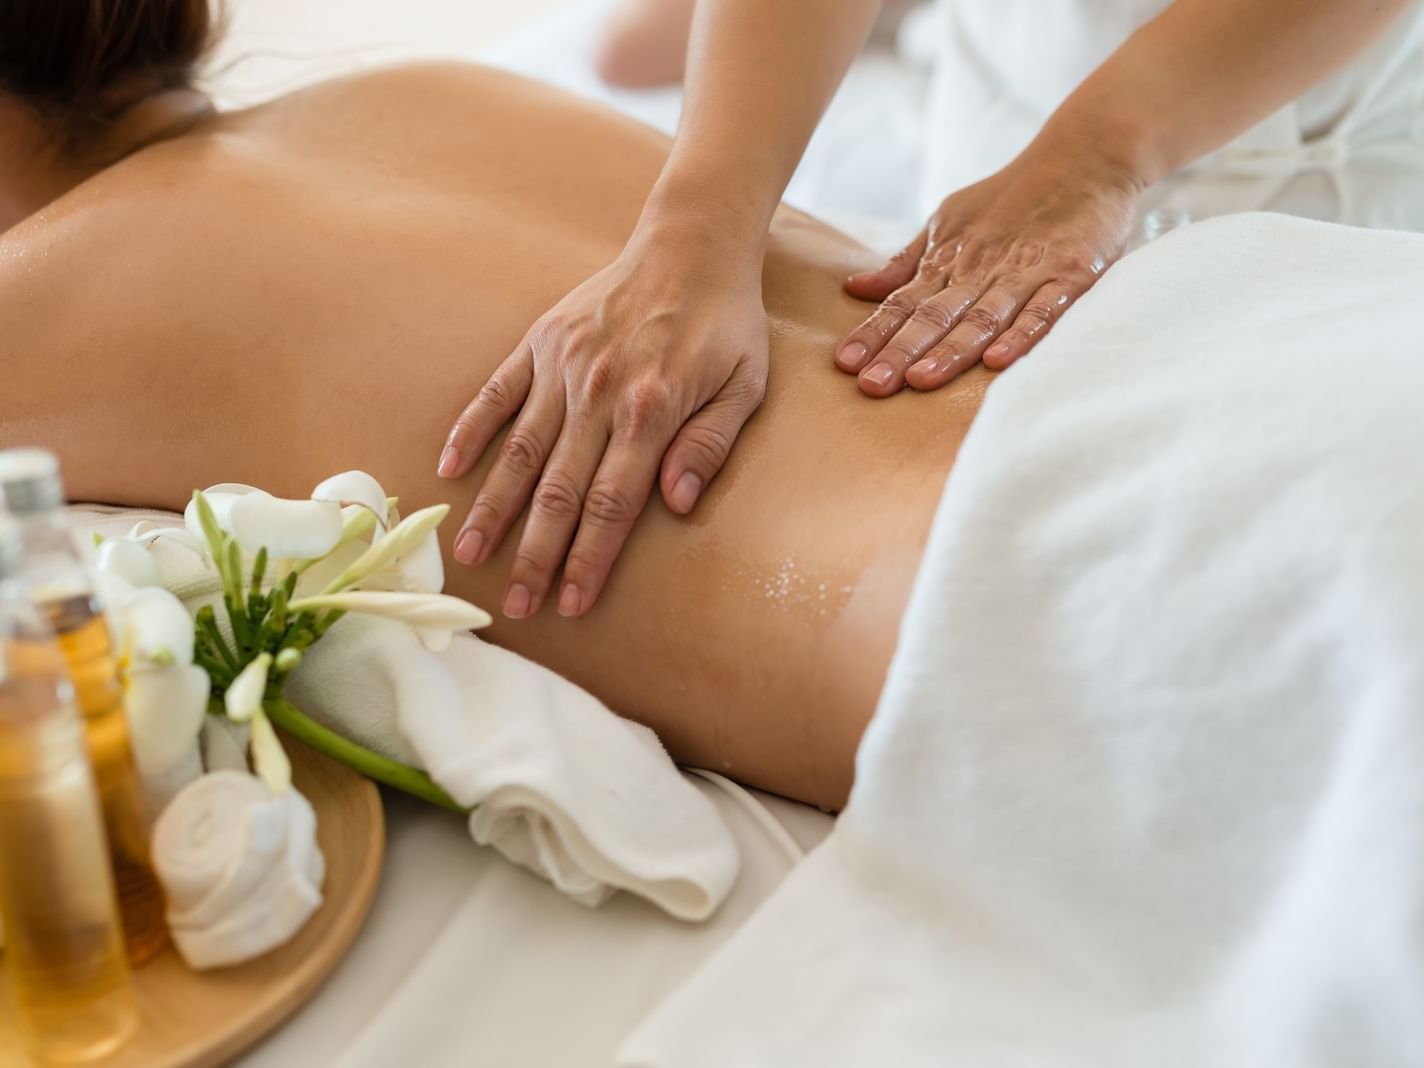 A lady receiving a body massage in the spa at La Colección